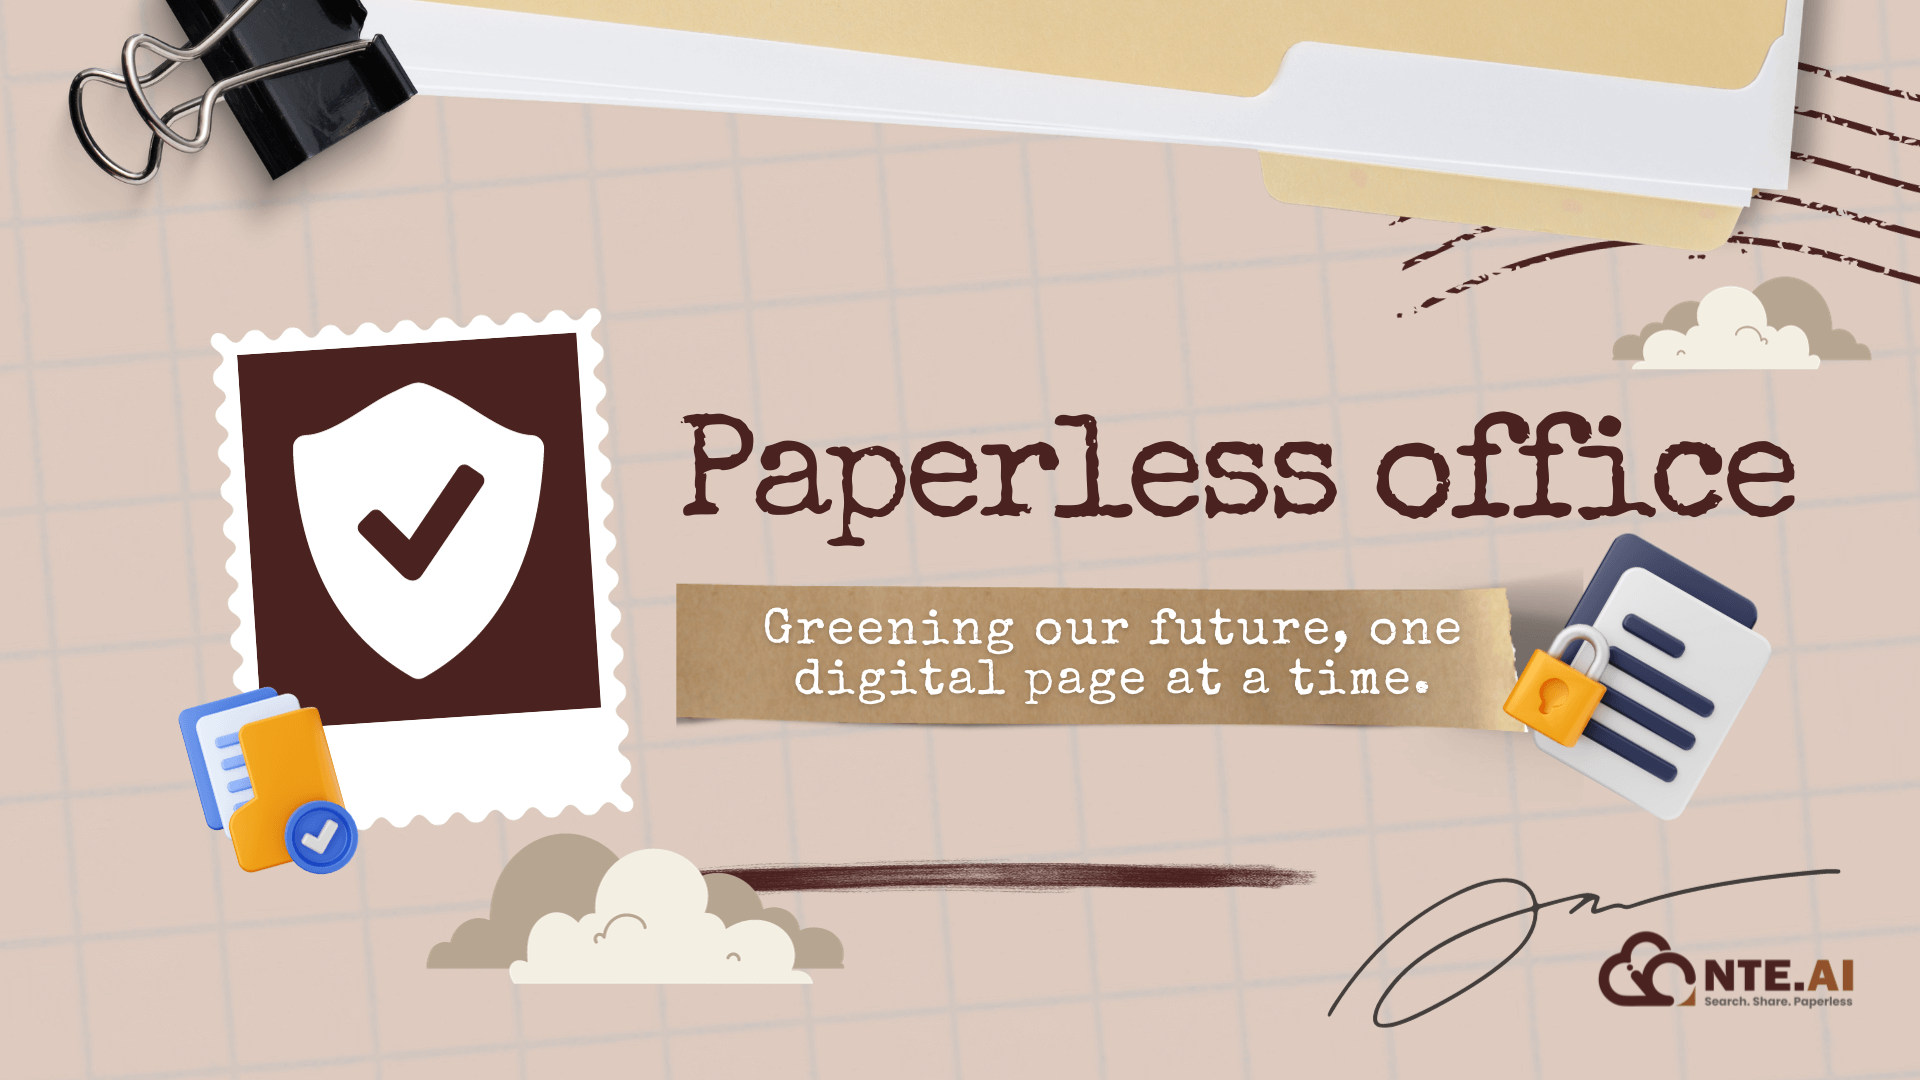 paperless-office